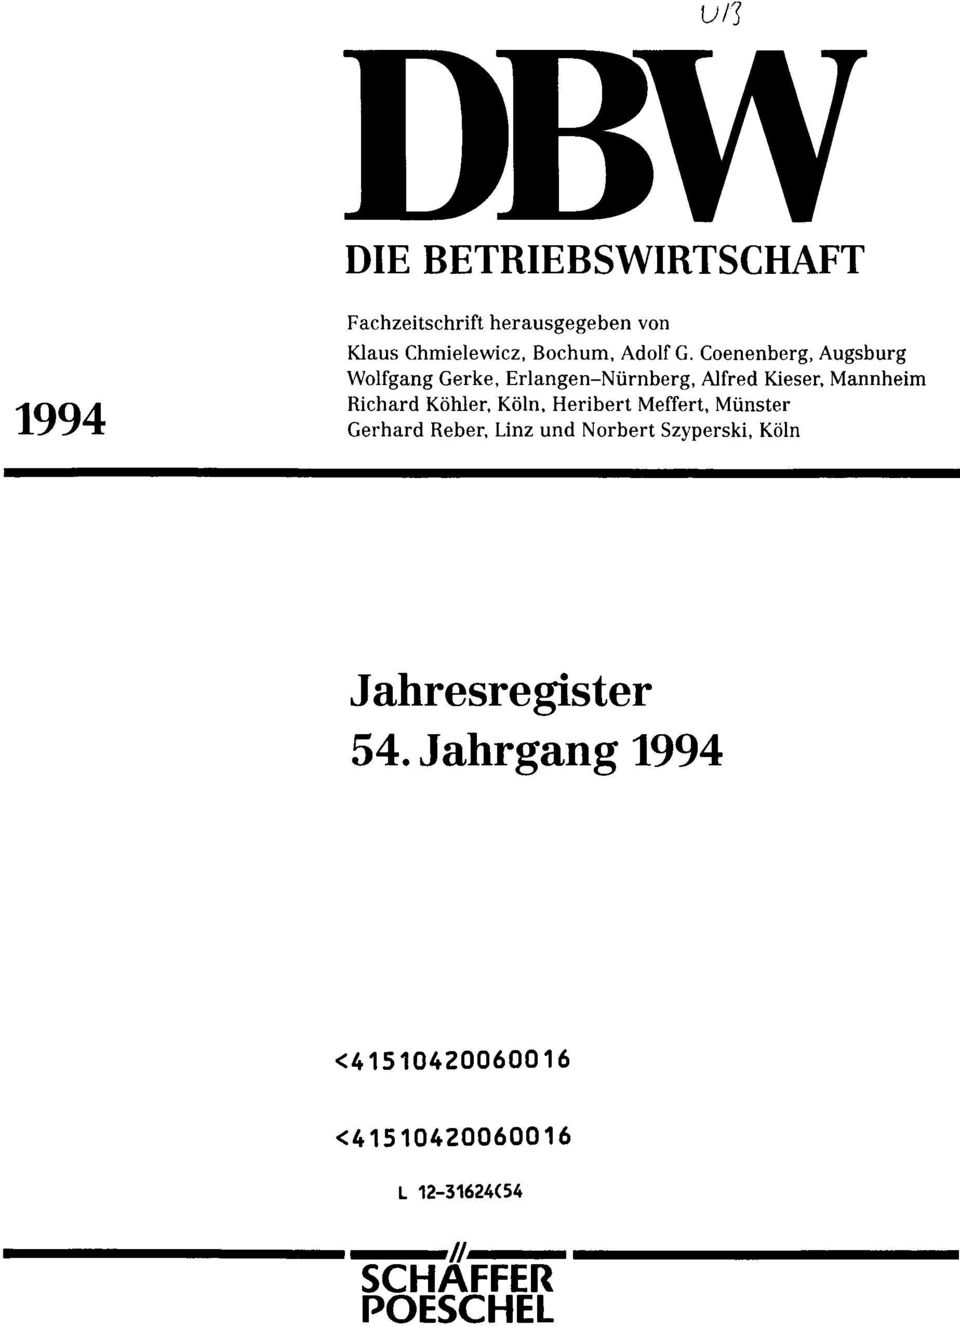 Coenenberg, Augsburg Wolfgang Gerke, Erlangen-Nürnberg, Alfred Kieser, Mannheim Richard